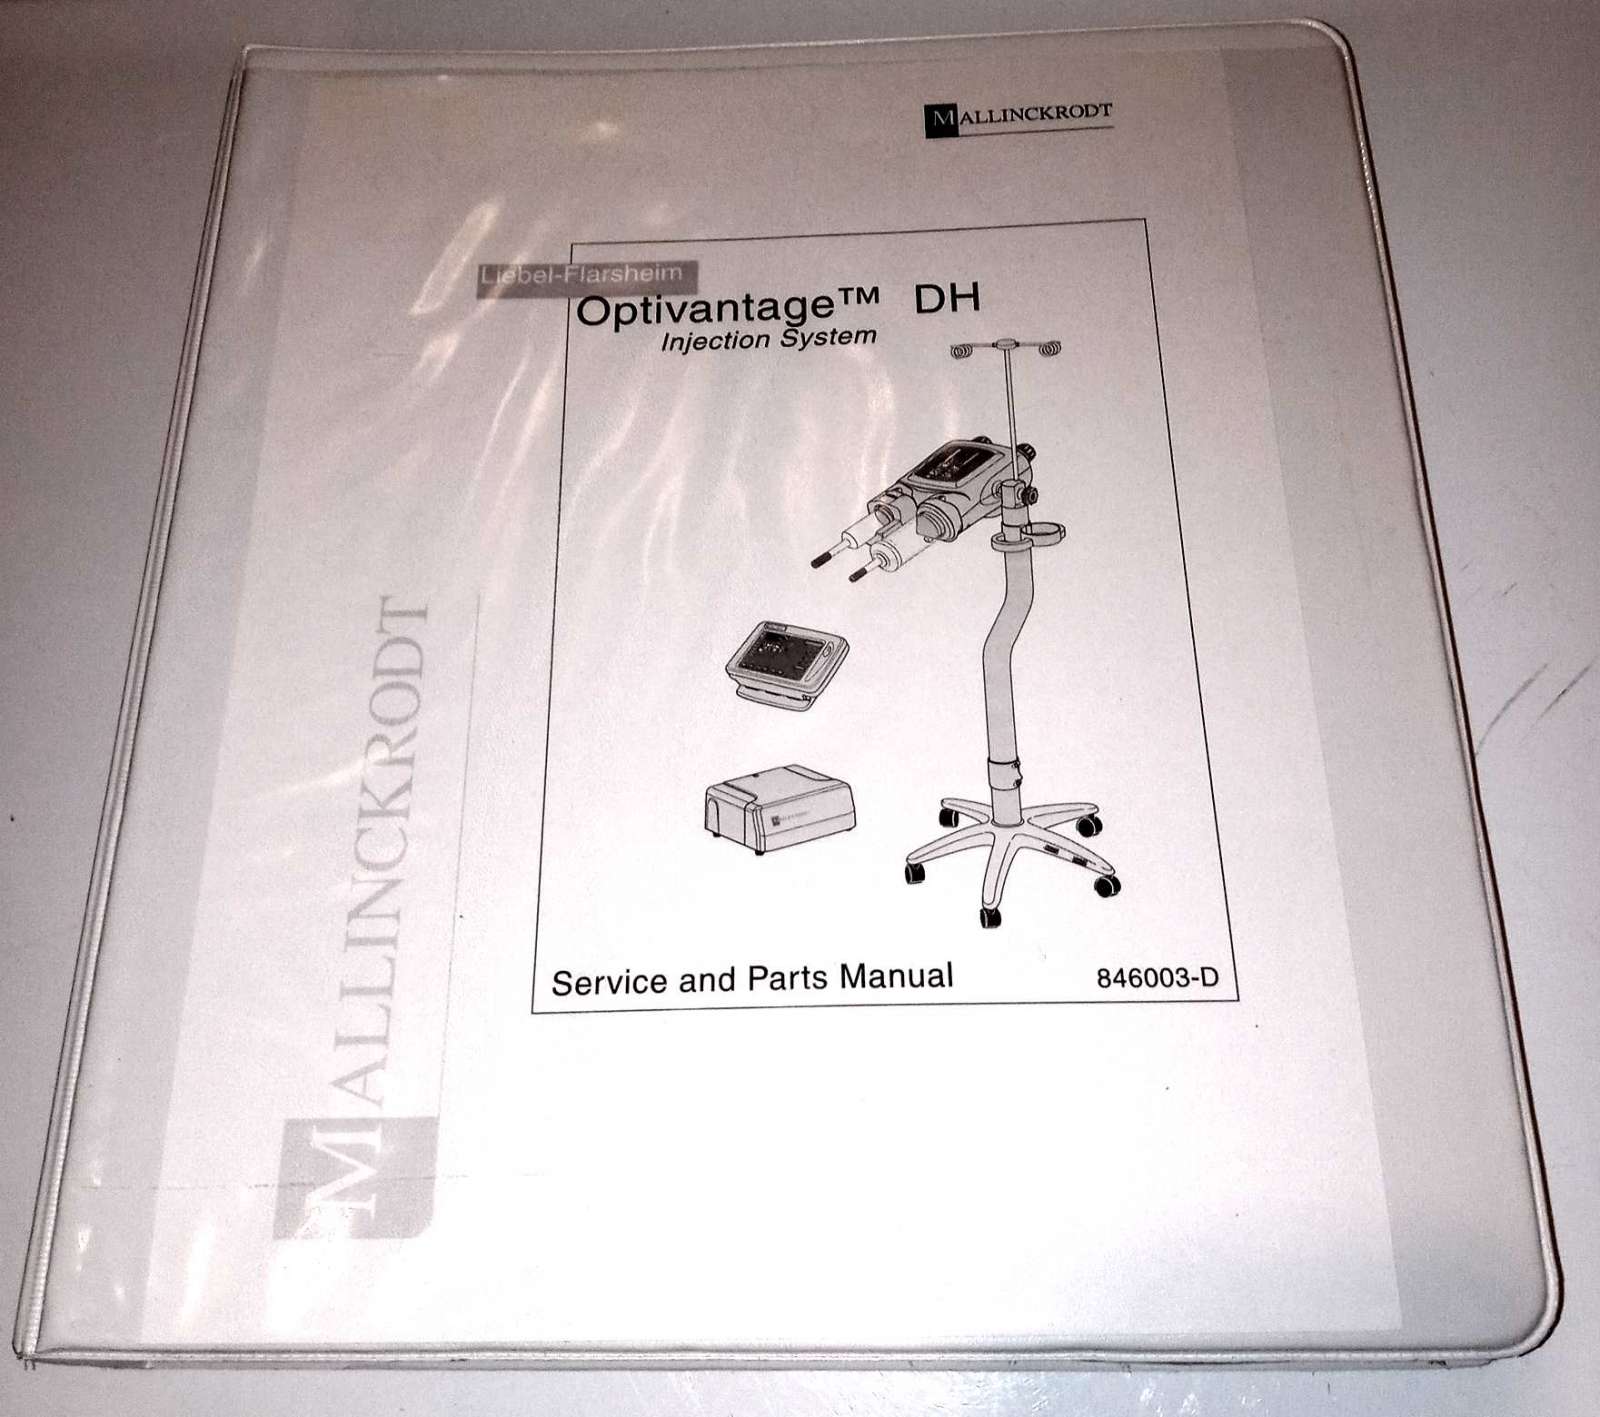 Mallinkcrodt - Guerbet Optivantage Service manual